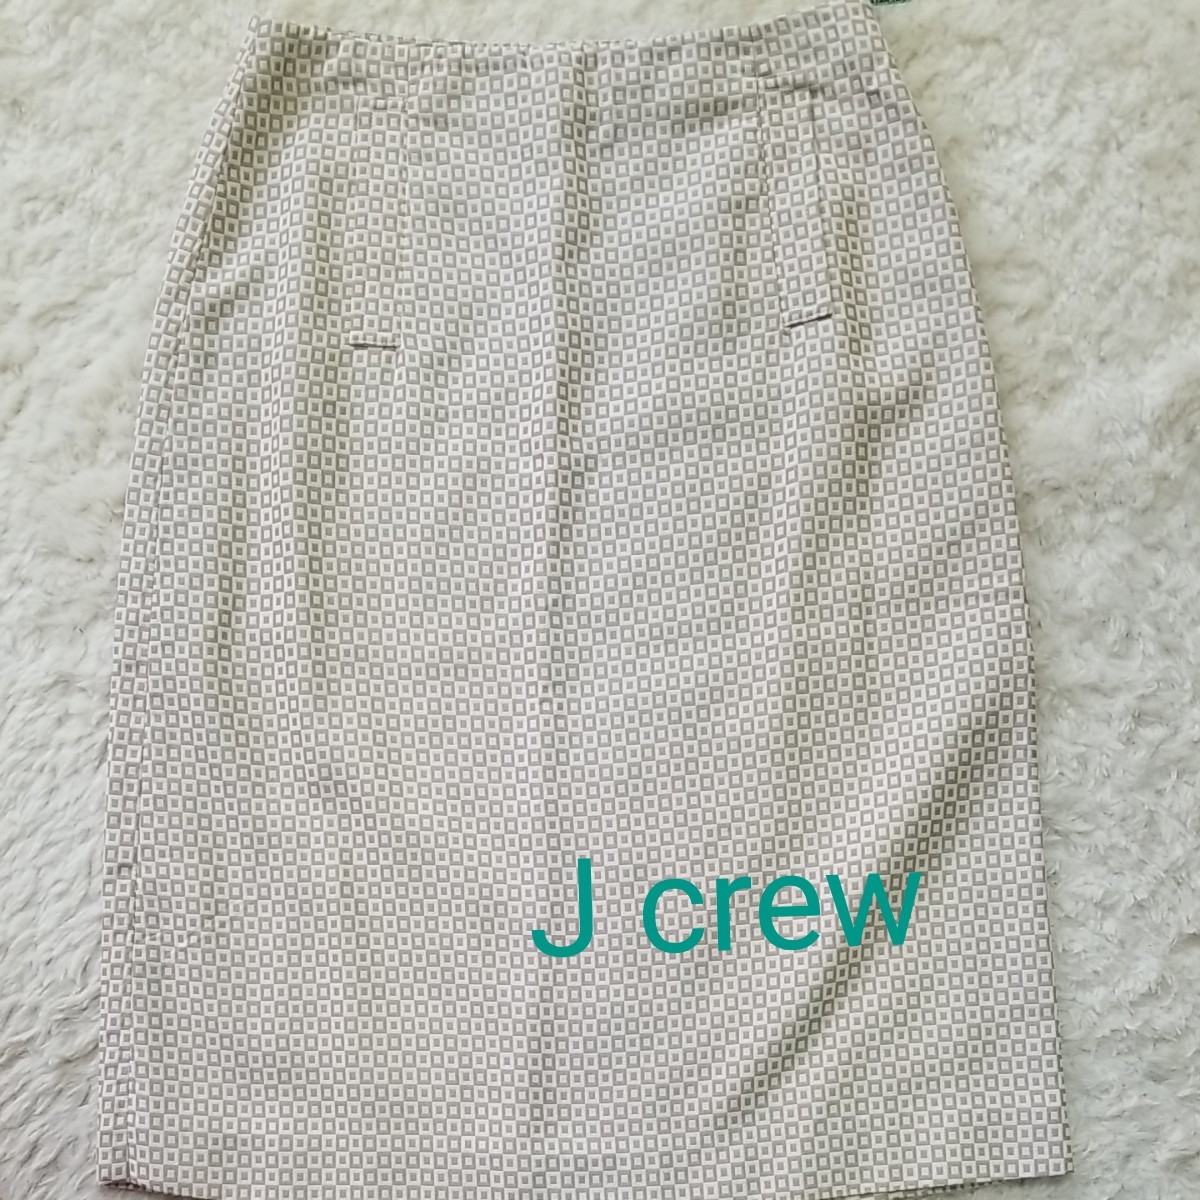 Jcrew夏 タイトスカート膝下丈一枚仕立て63cm染み汚れなし白×ベージュ